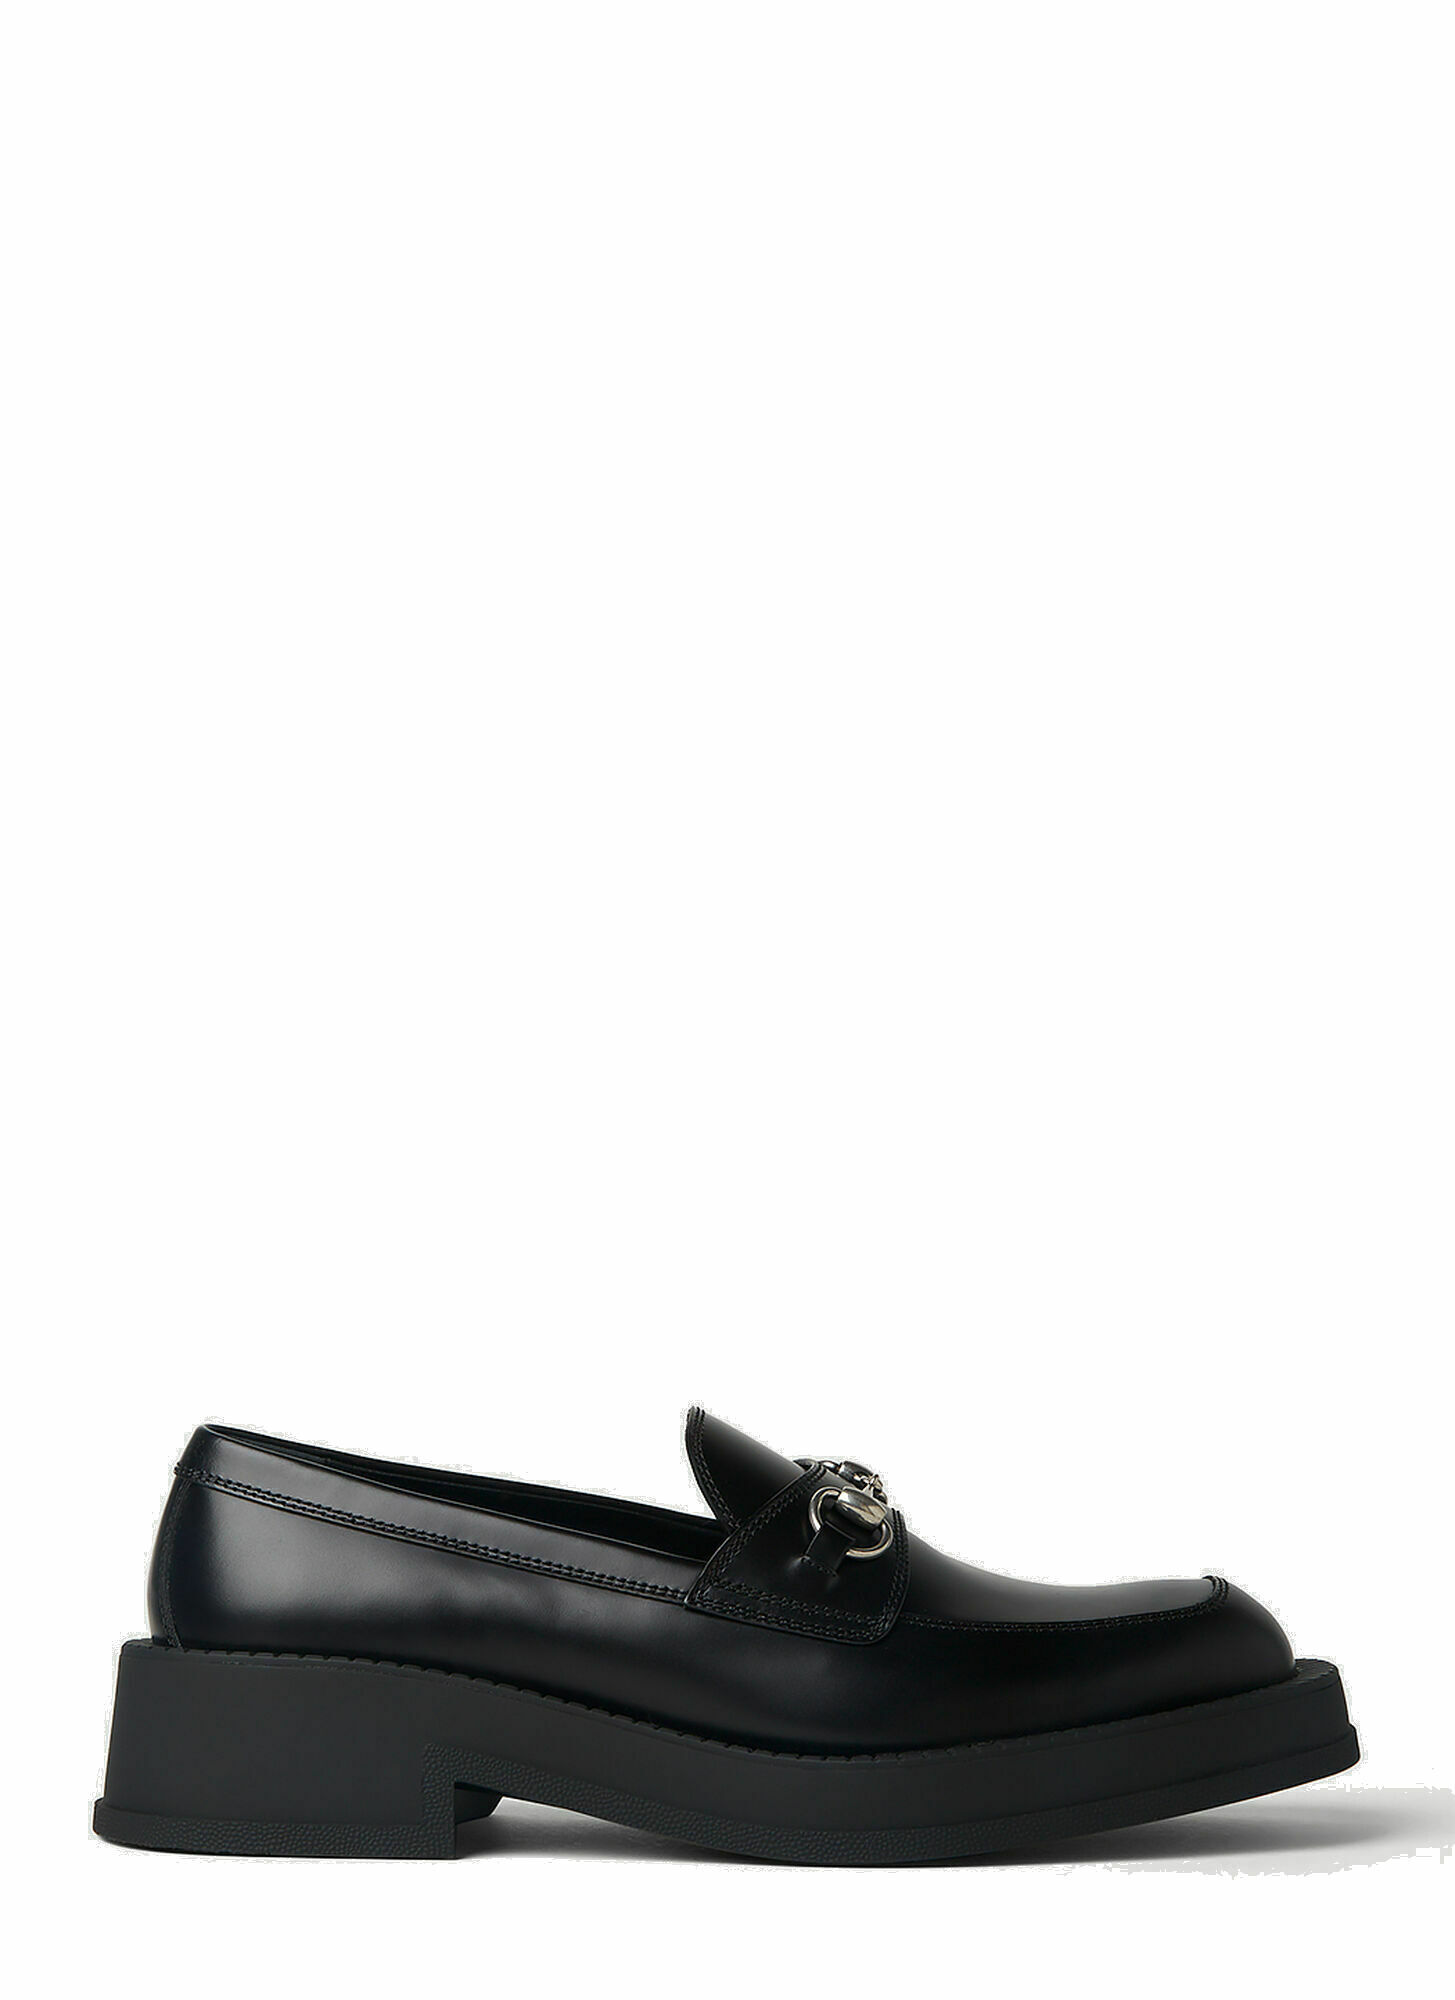 Gucci - Horsebit Loafers in Black Gucci